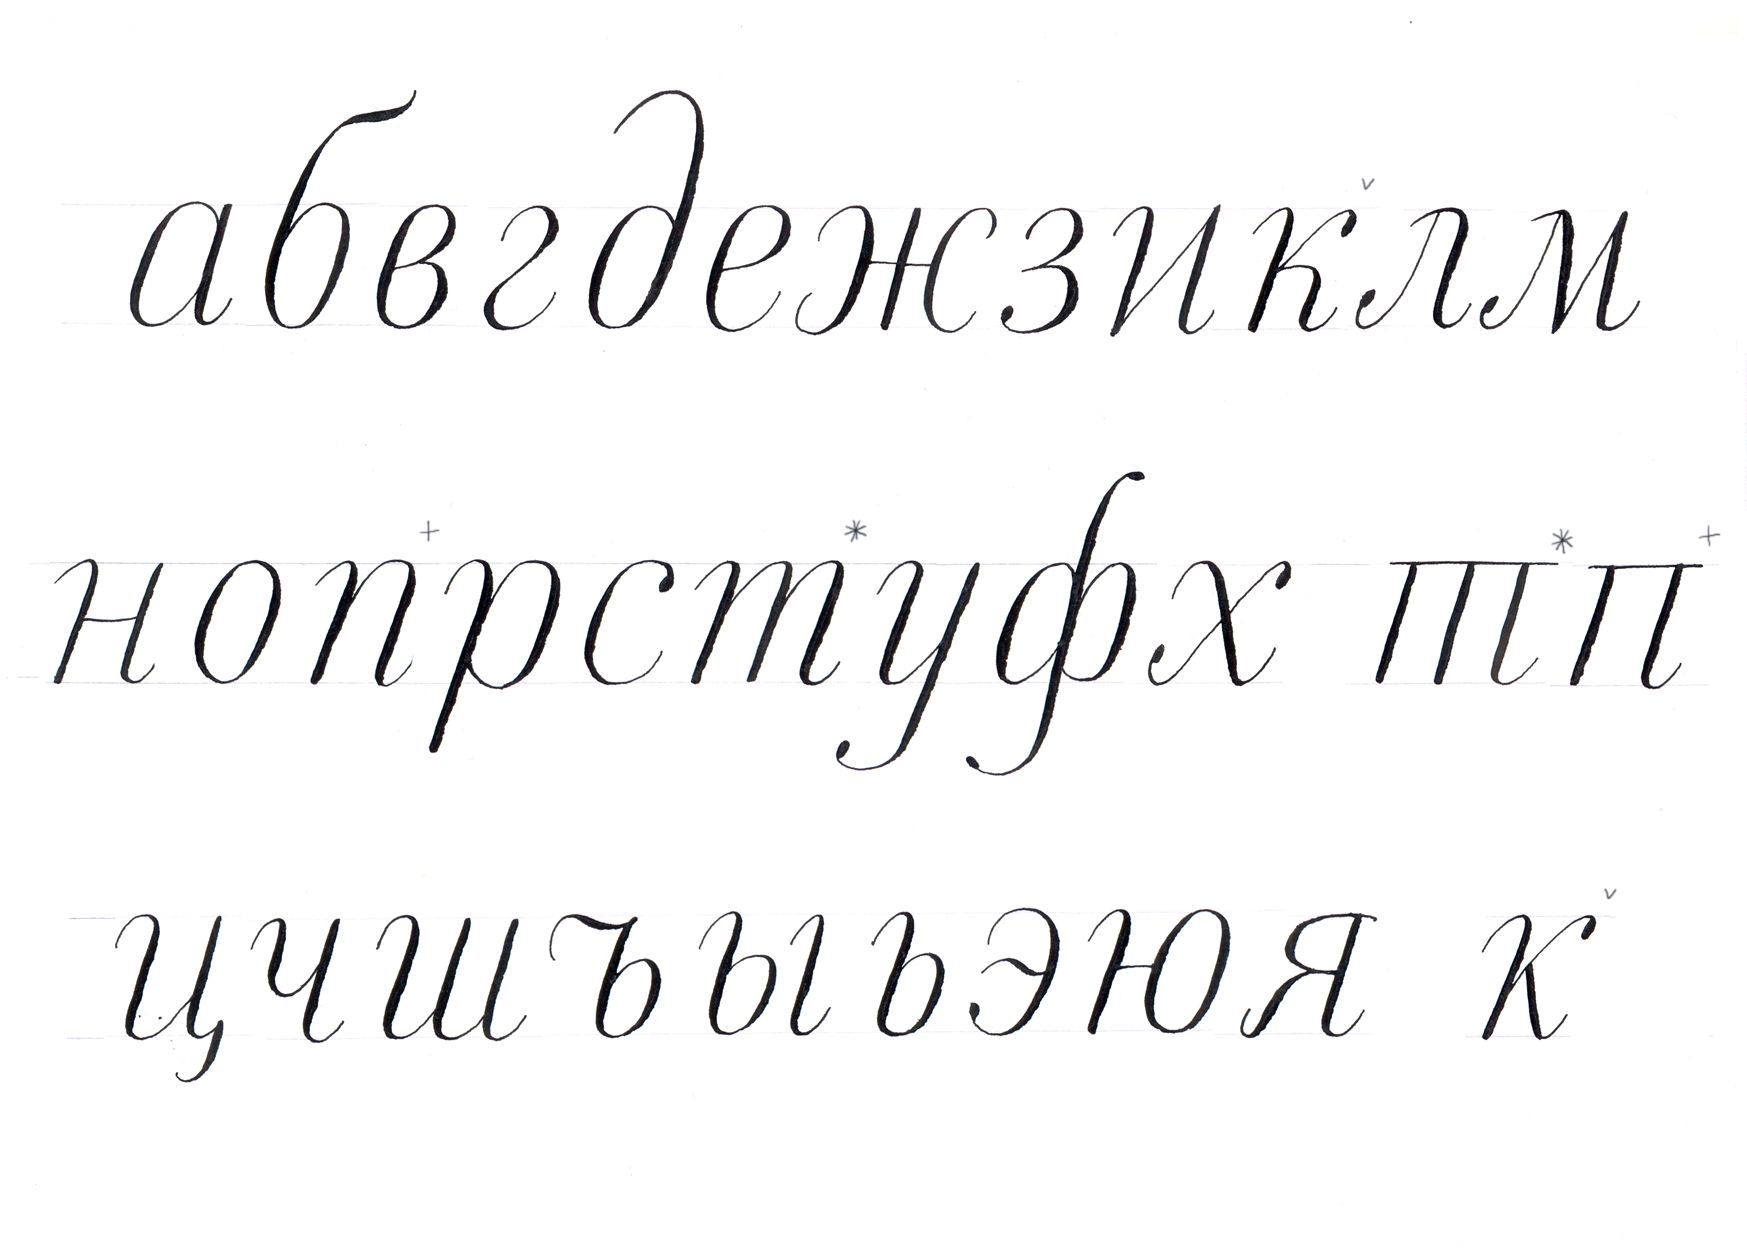 Cyrillic samples by Vera Evstafieva